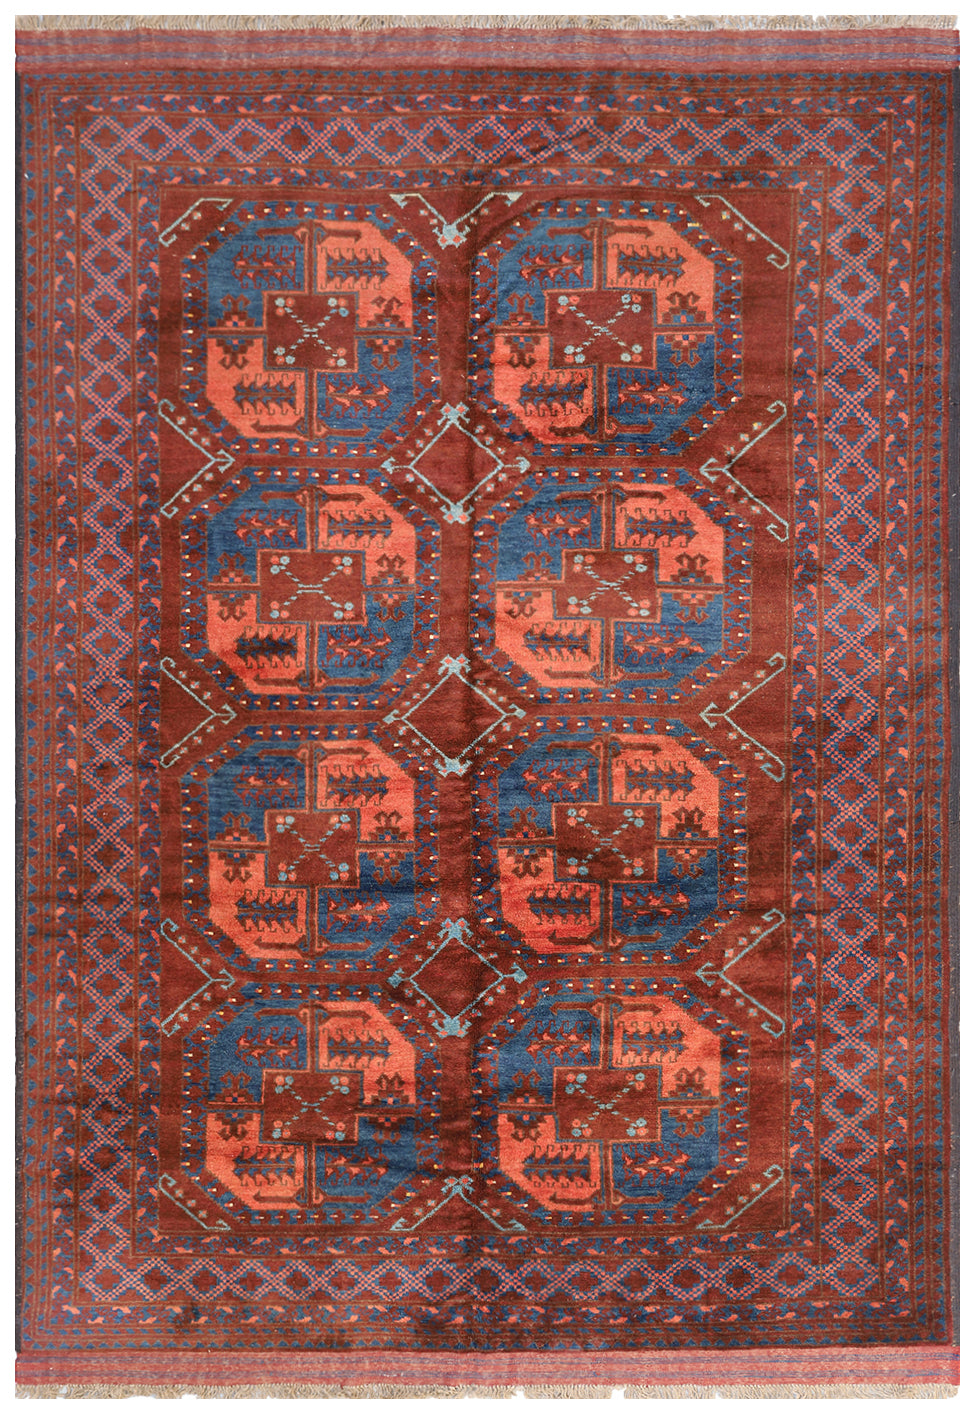 7x10 Tribal Rust Brown Blue Afghan Elephant Foot Design Area Rug